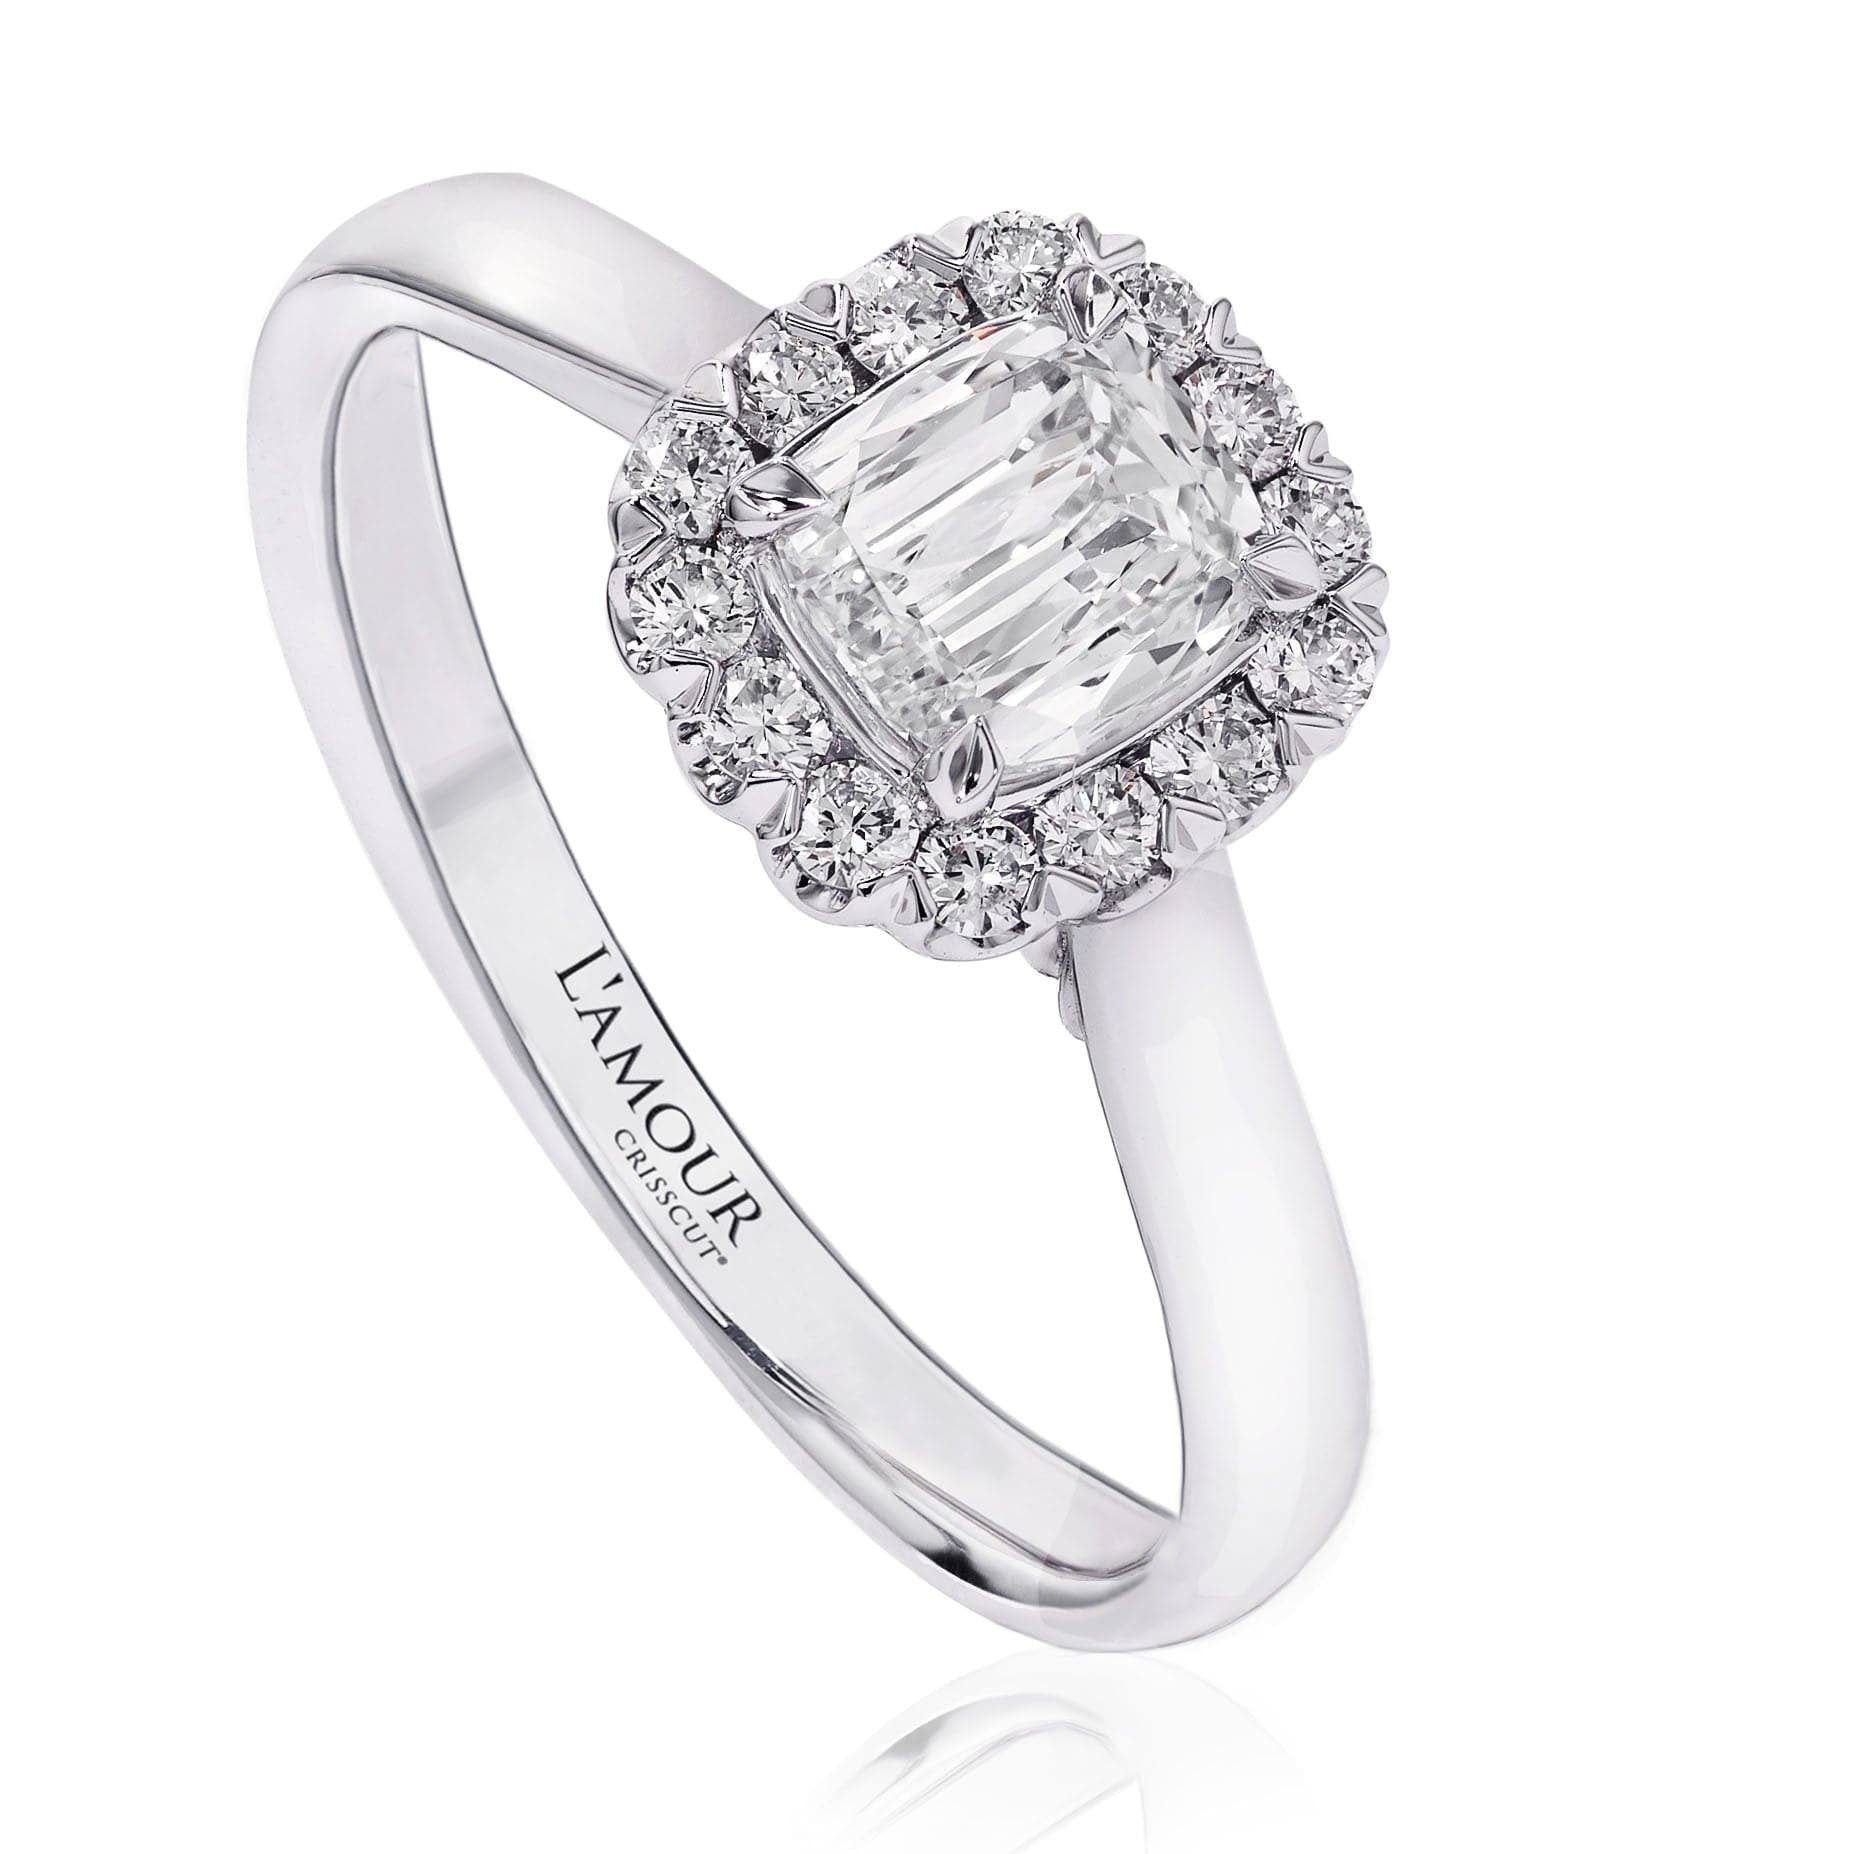 Christopher Designs Bridal Engagement Ring L'Amour Crisscut Cushion .50ct Engagement Ring